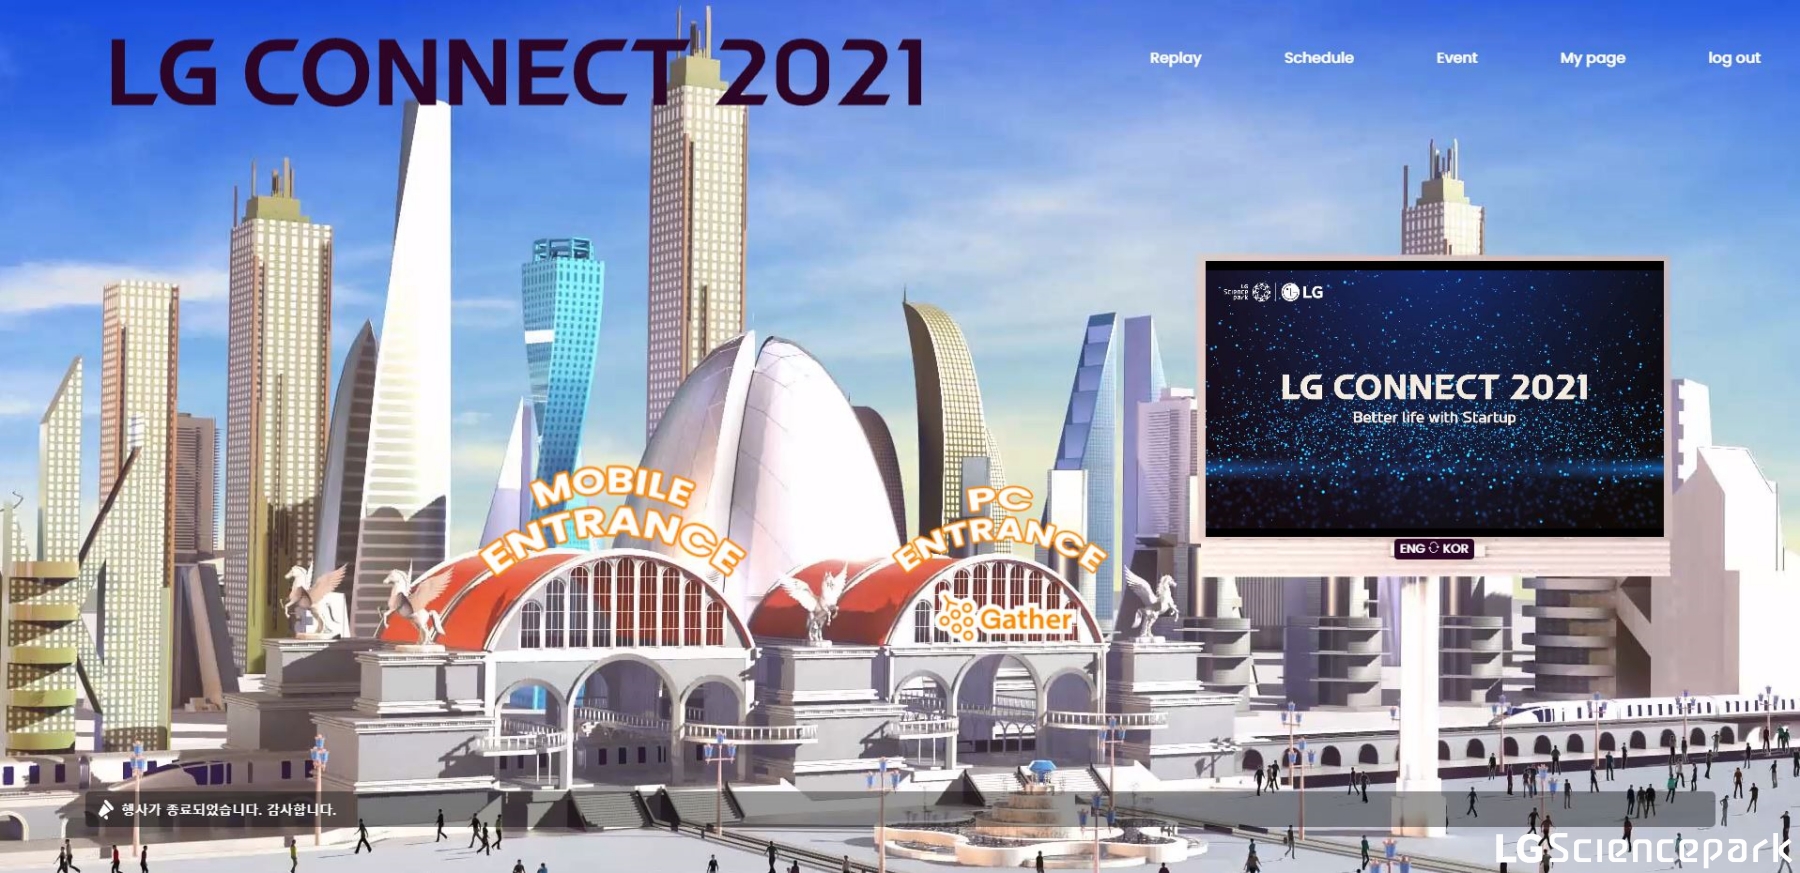 LG CONNECT 2021가 진행된 온라인 플랫폼